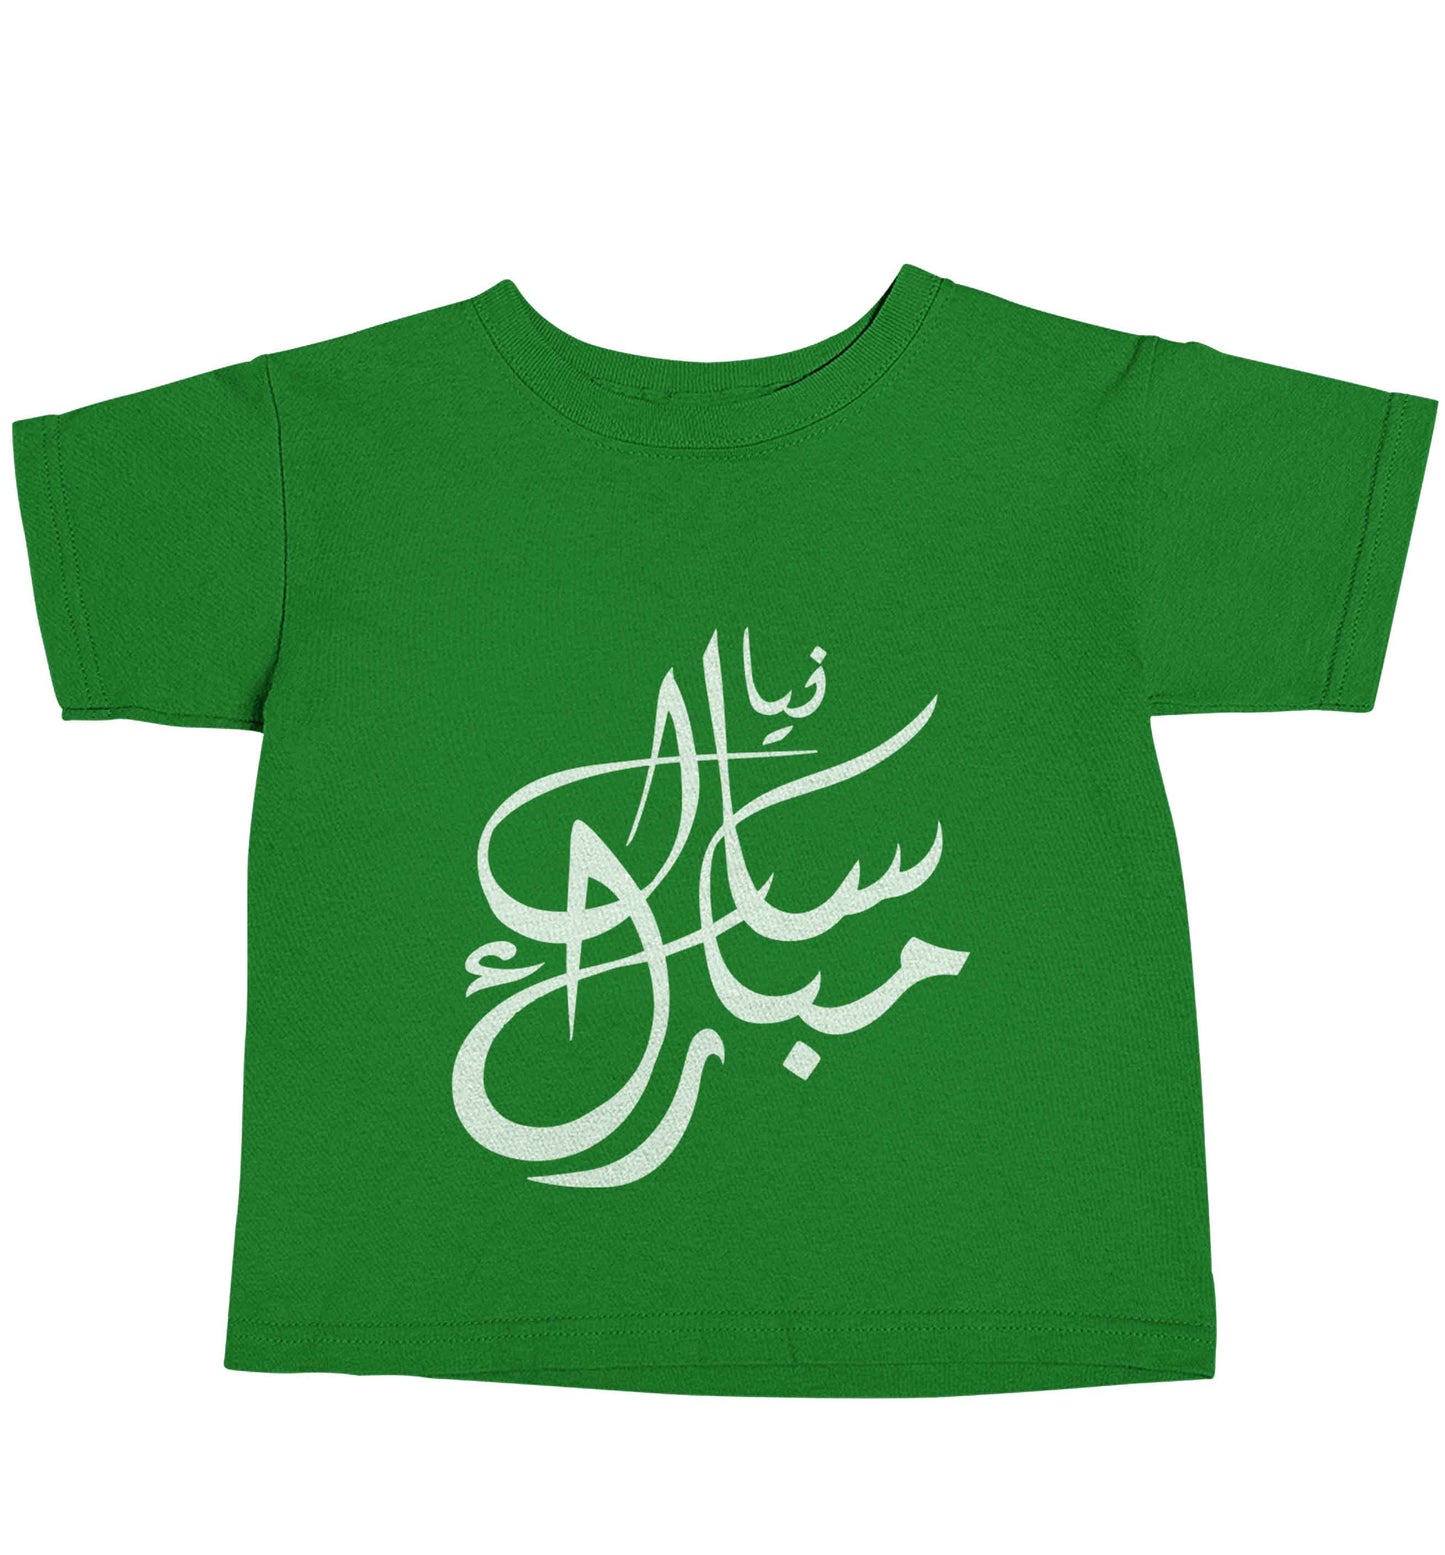 Urdu Naya saal mubarak green baby toddler Tshirt 2 Years